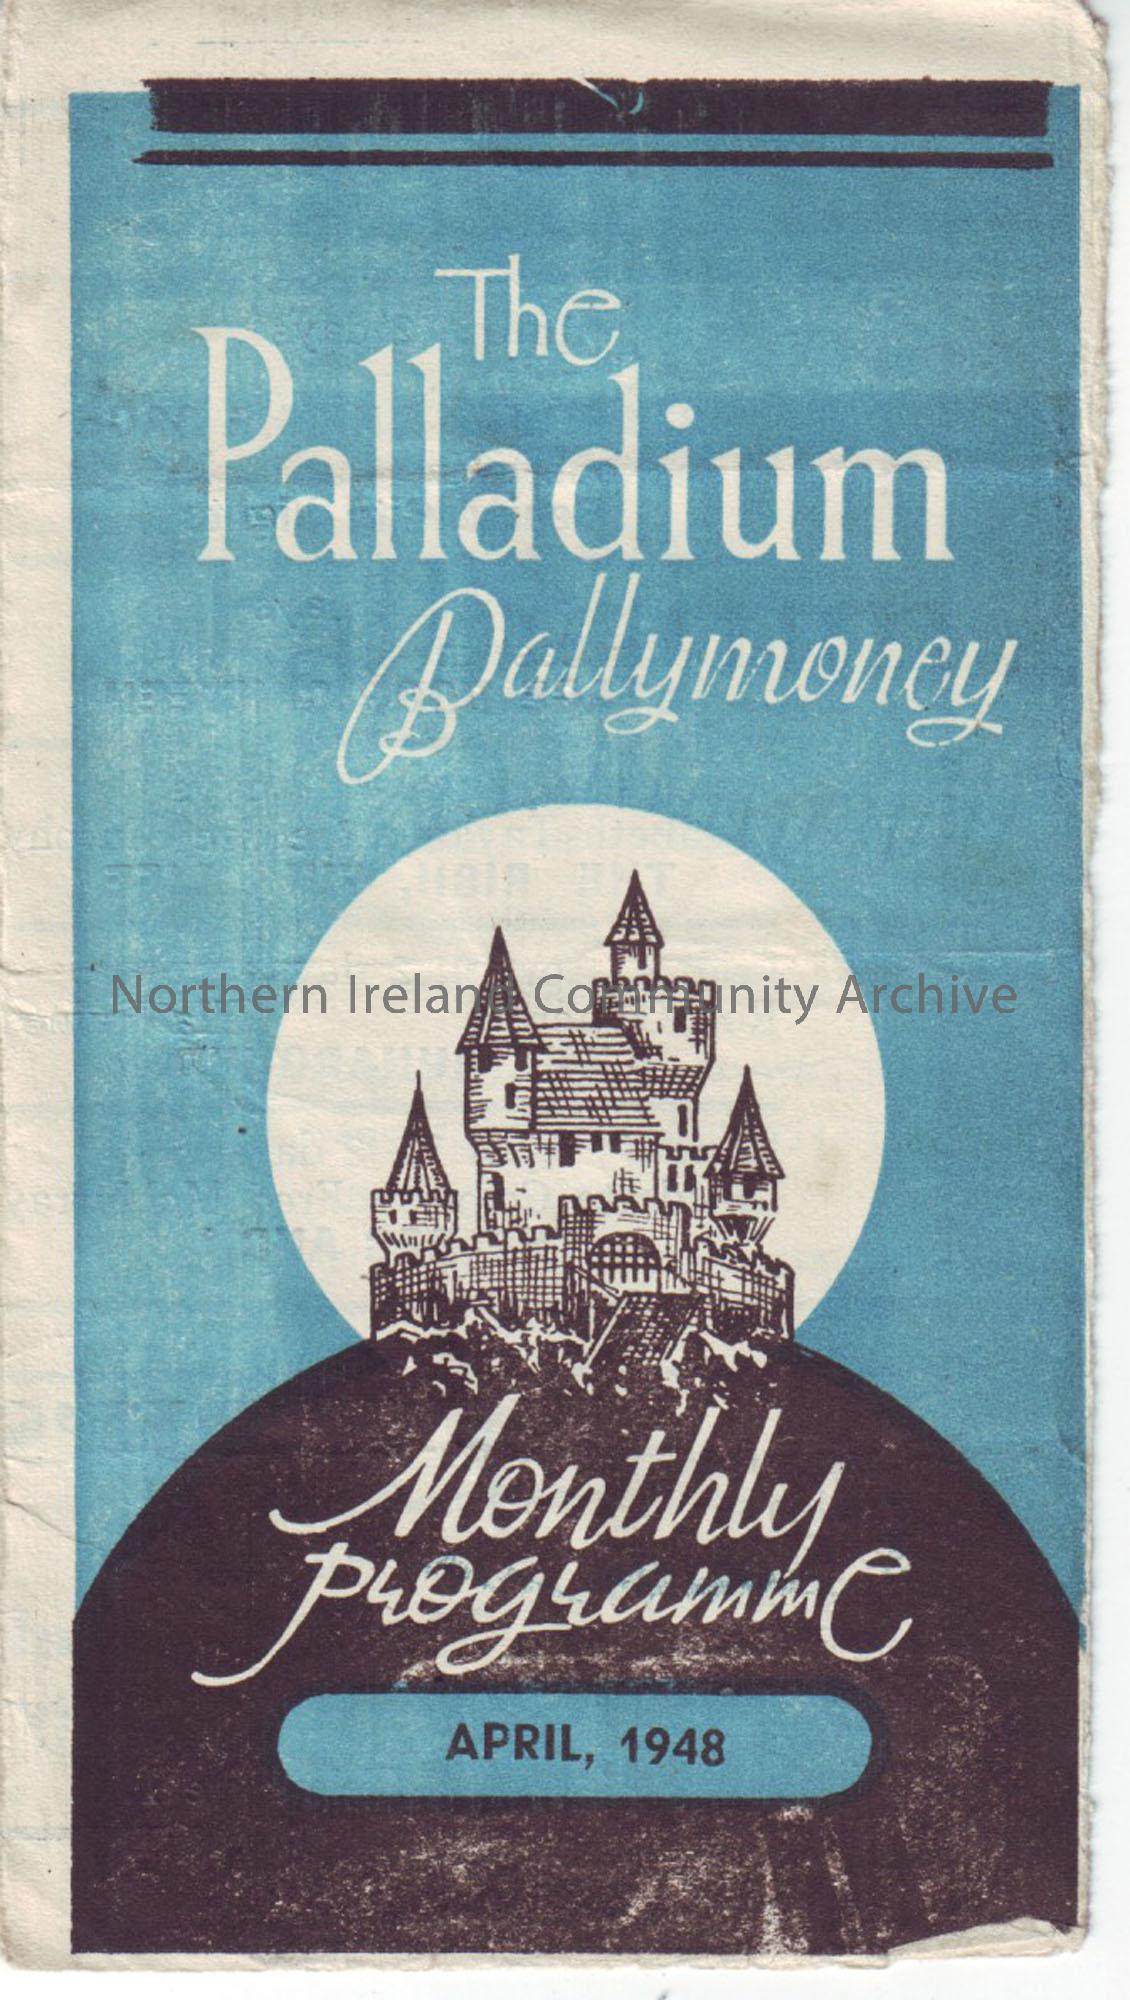 blue monthly programme for Ballymoney Palladium cinema- April 1948